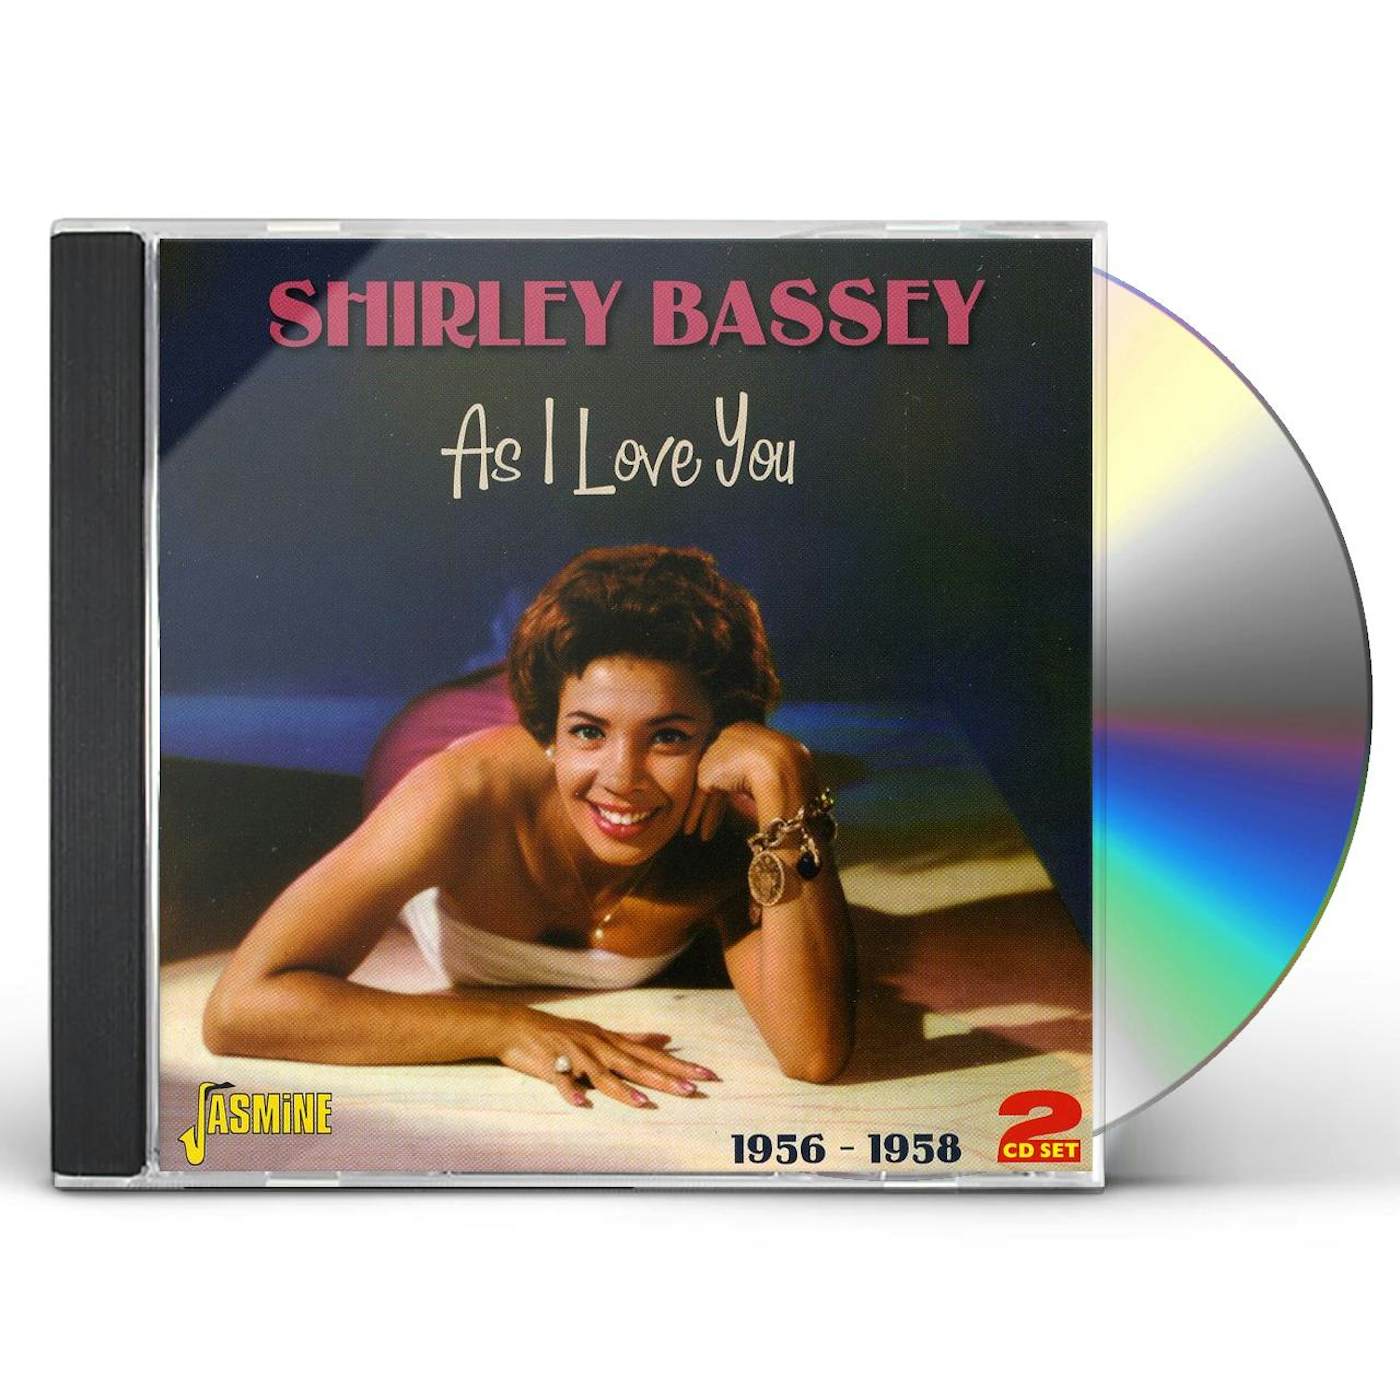 Shirley Bassey AS I LOVE YOU 1956-58 CD